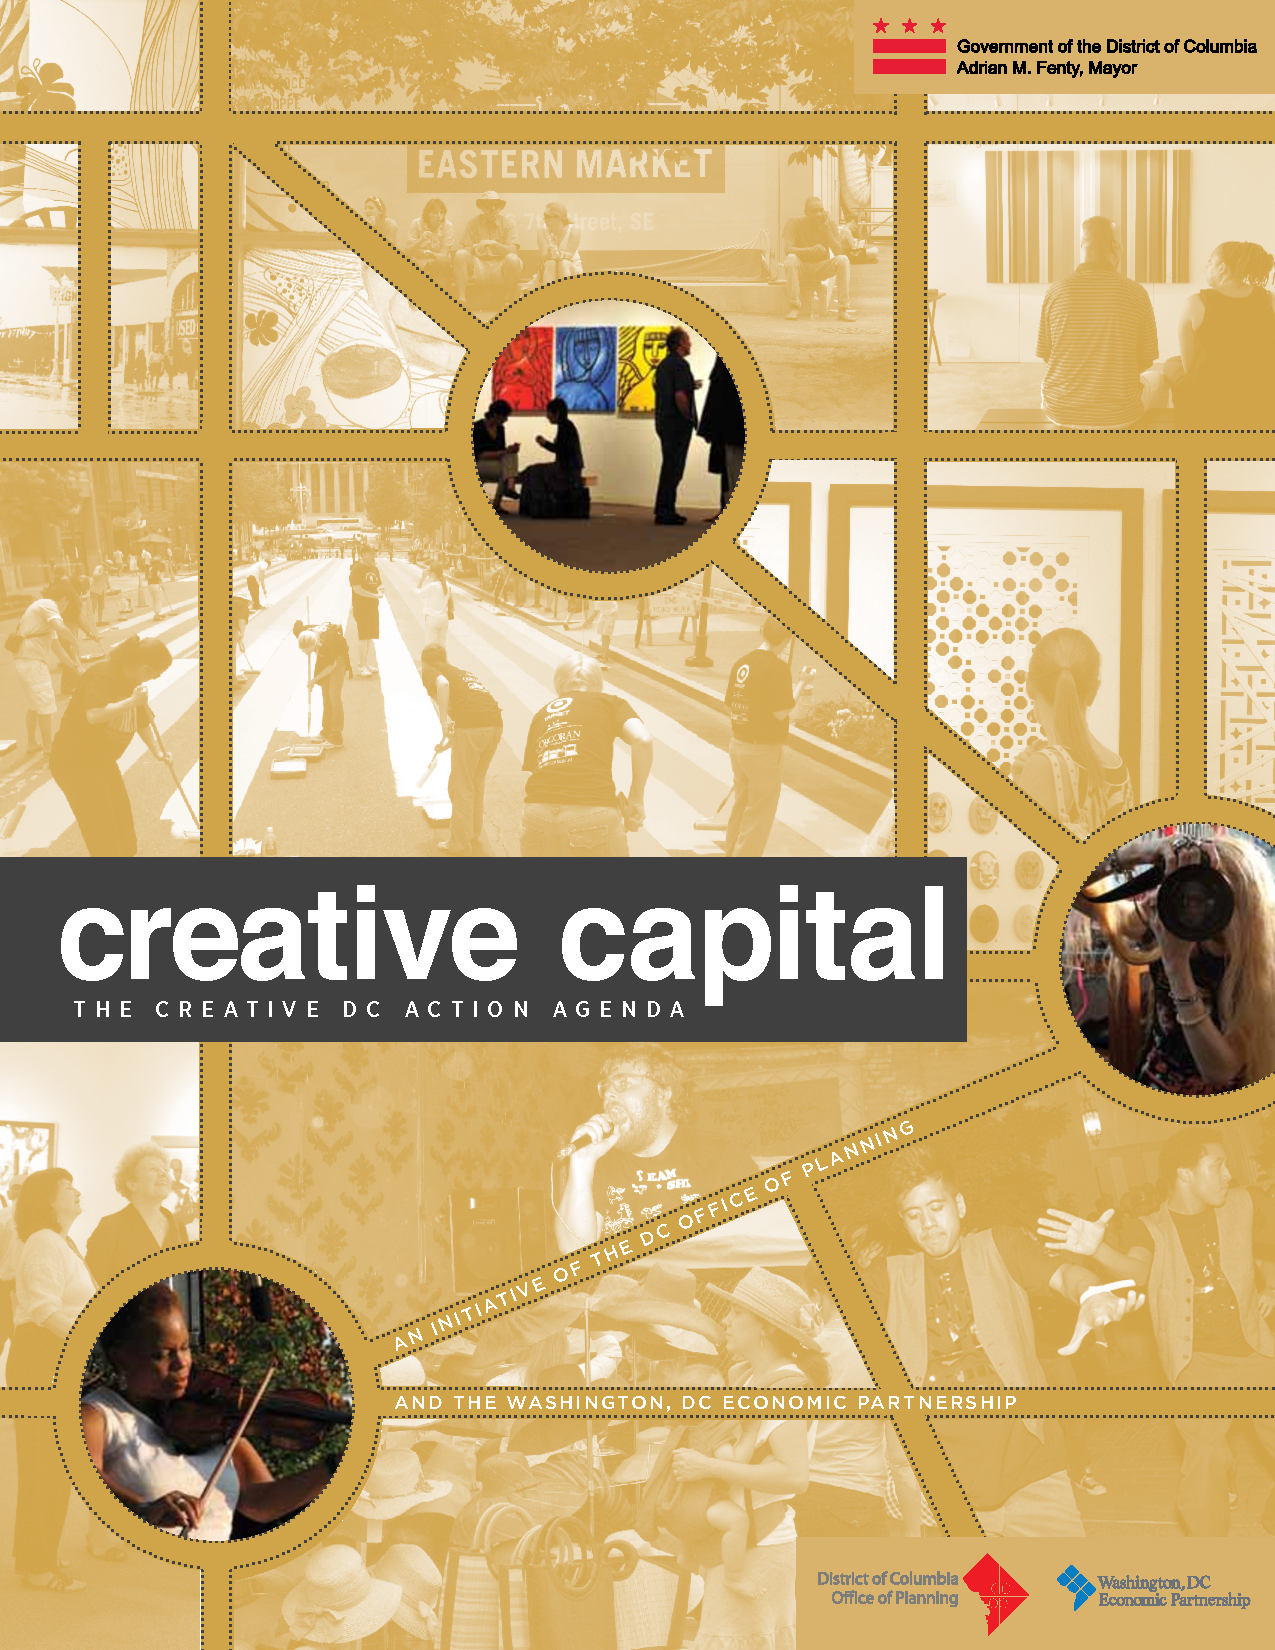 Creative Capital Webinar and Annual Art Student Exhibition 2013